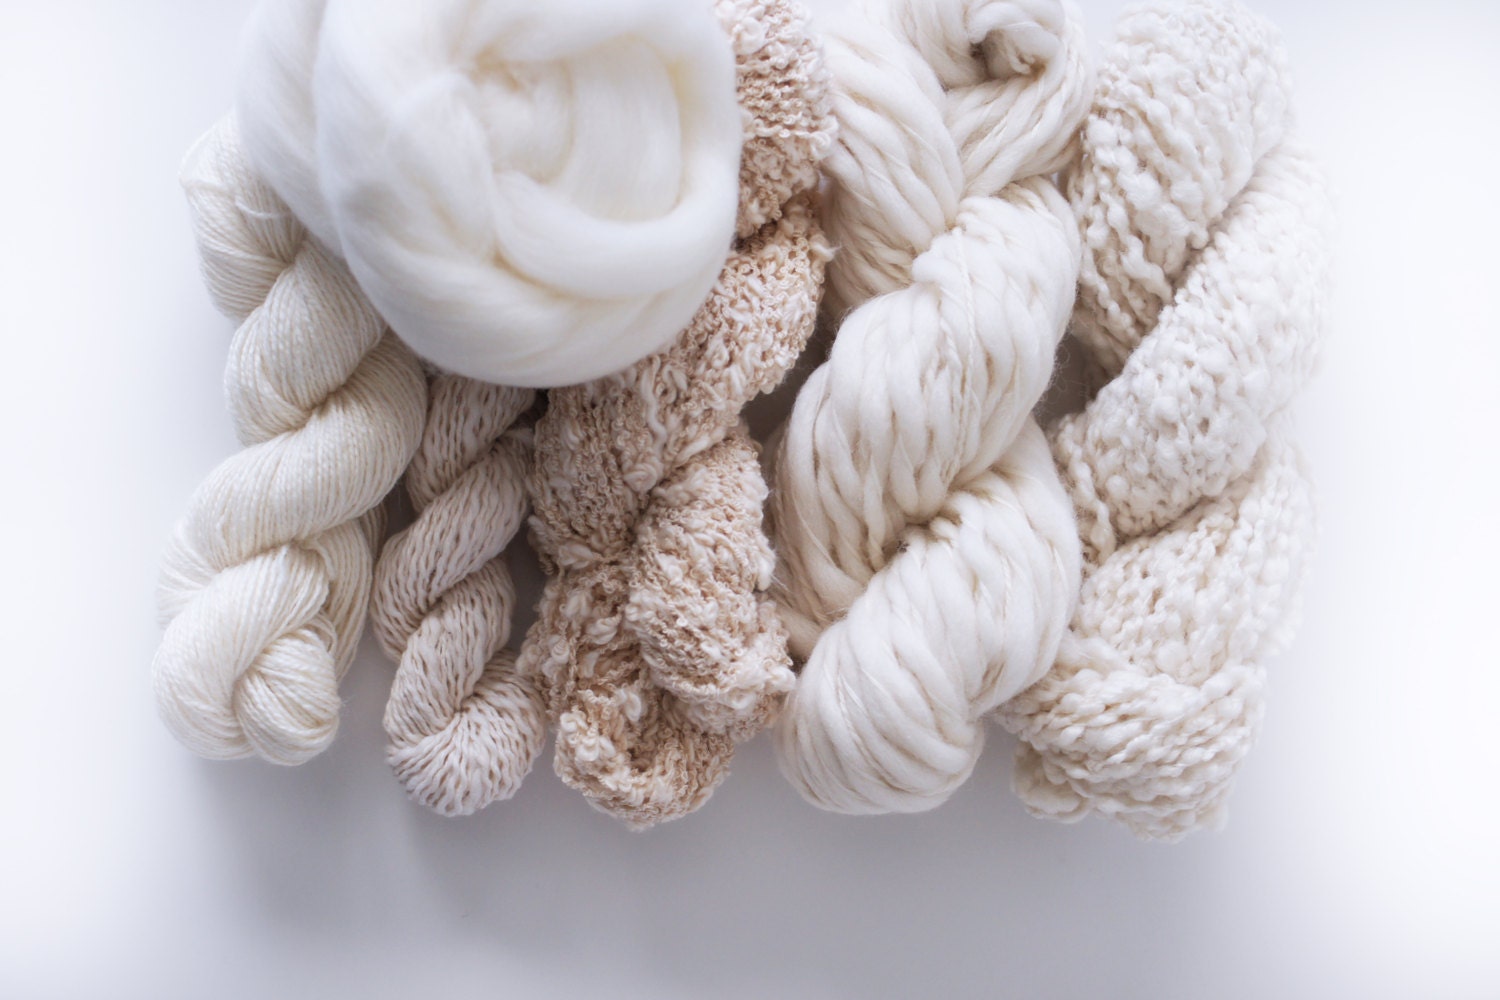 Patti US Organic Combed Cotton Fingering Weight Undyed Yarn